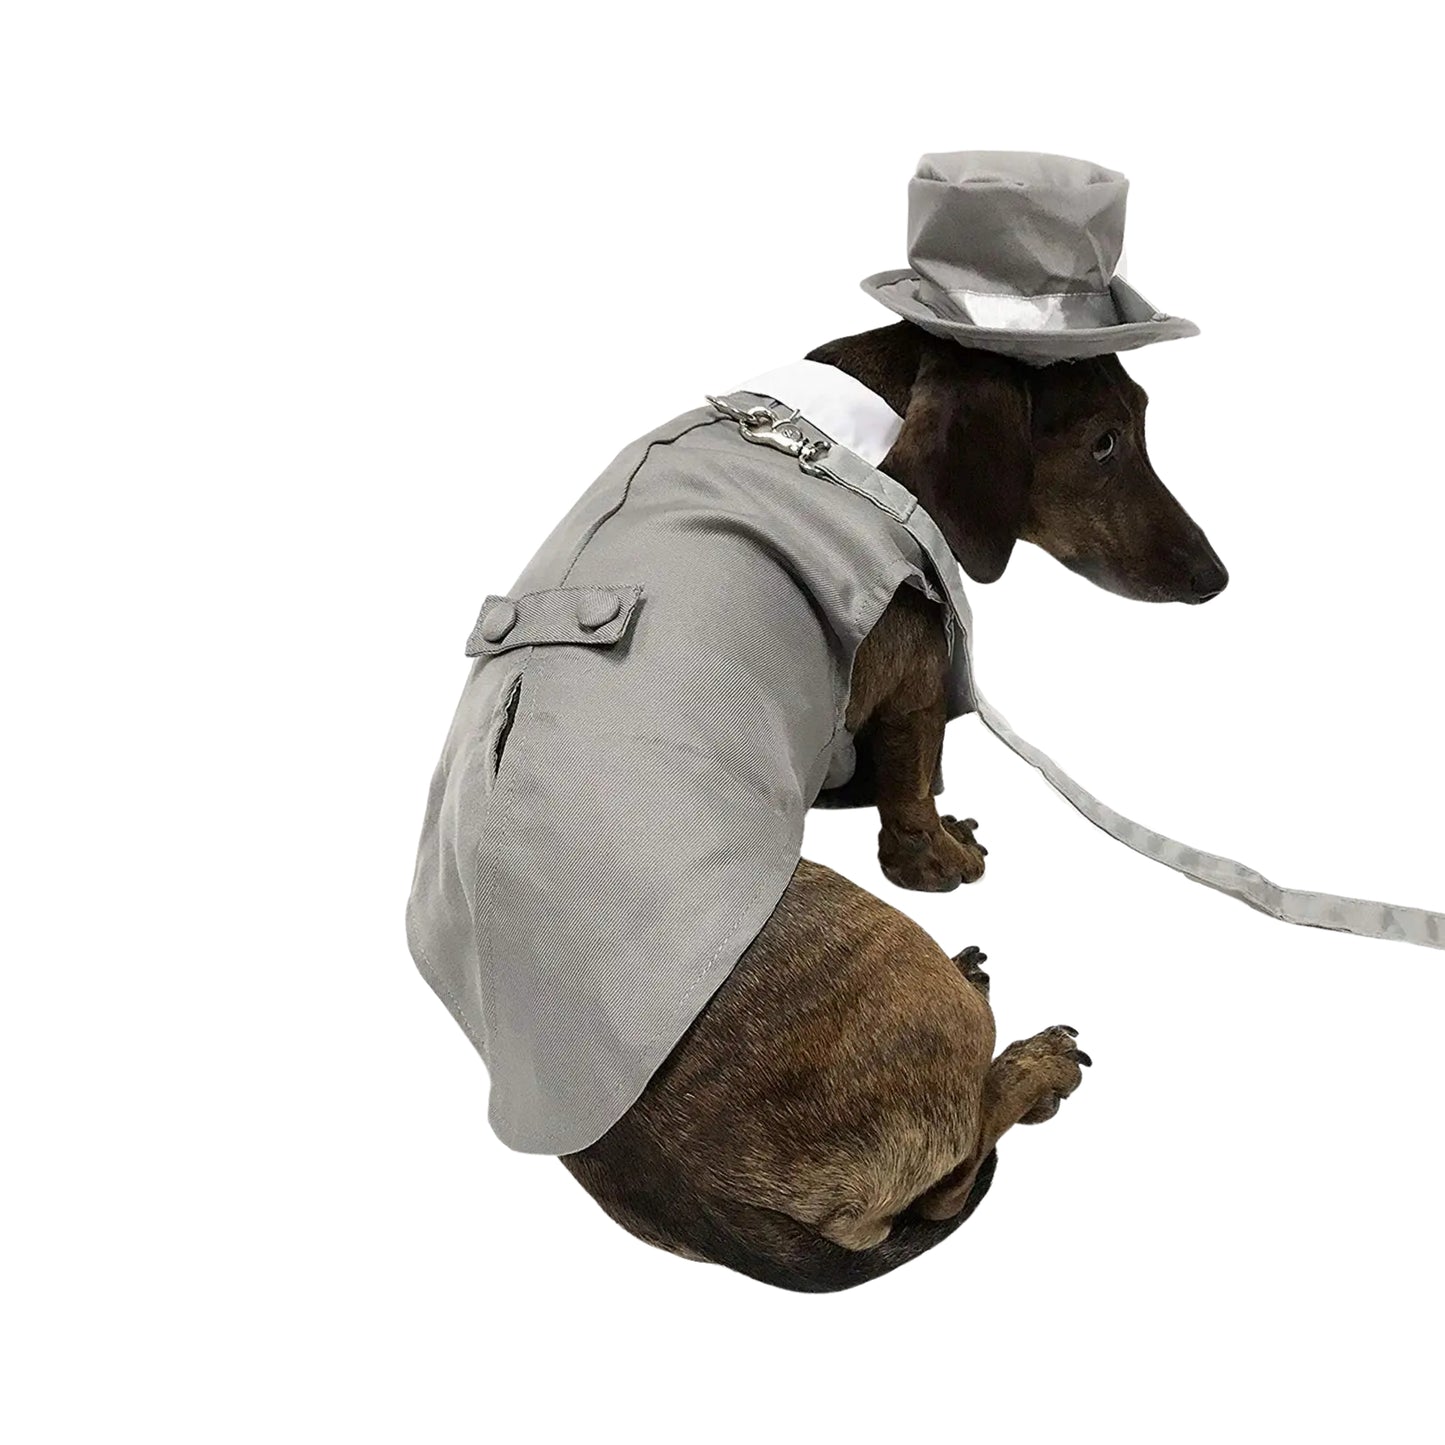 Midlee Dog Tuxedo Wedding Suit- Gray Top Hat & Leash